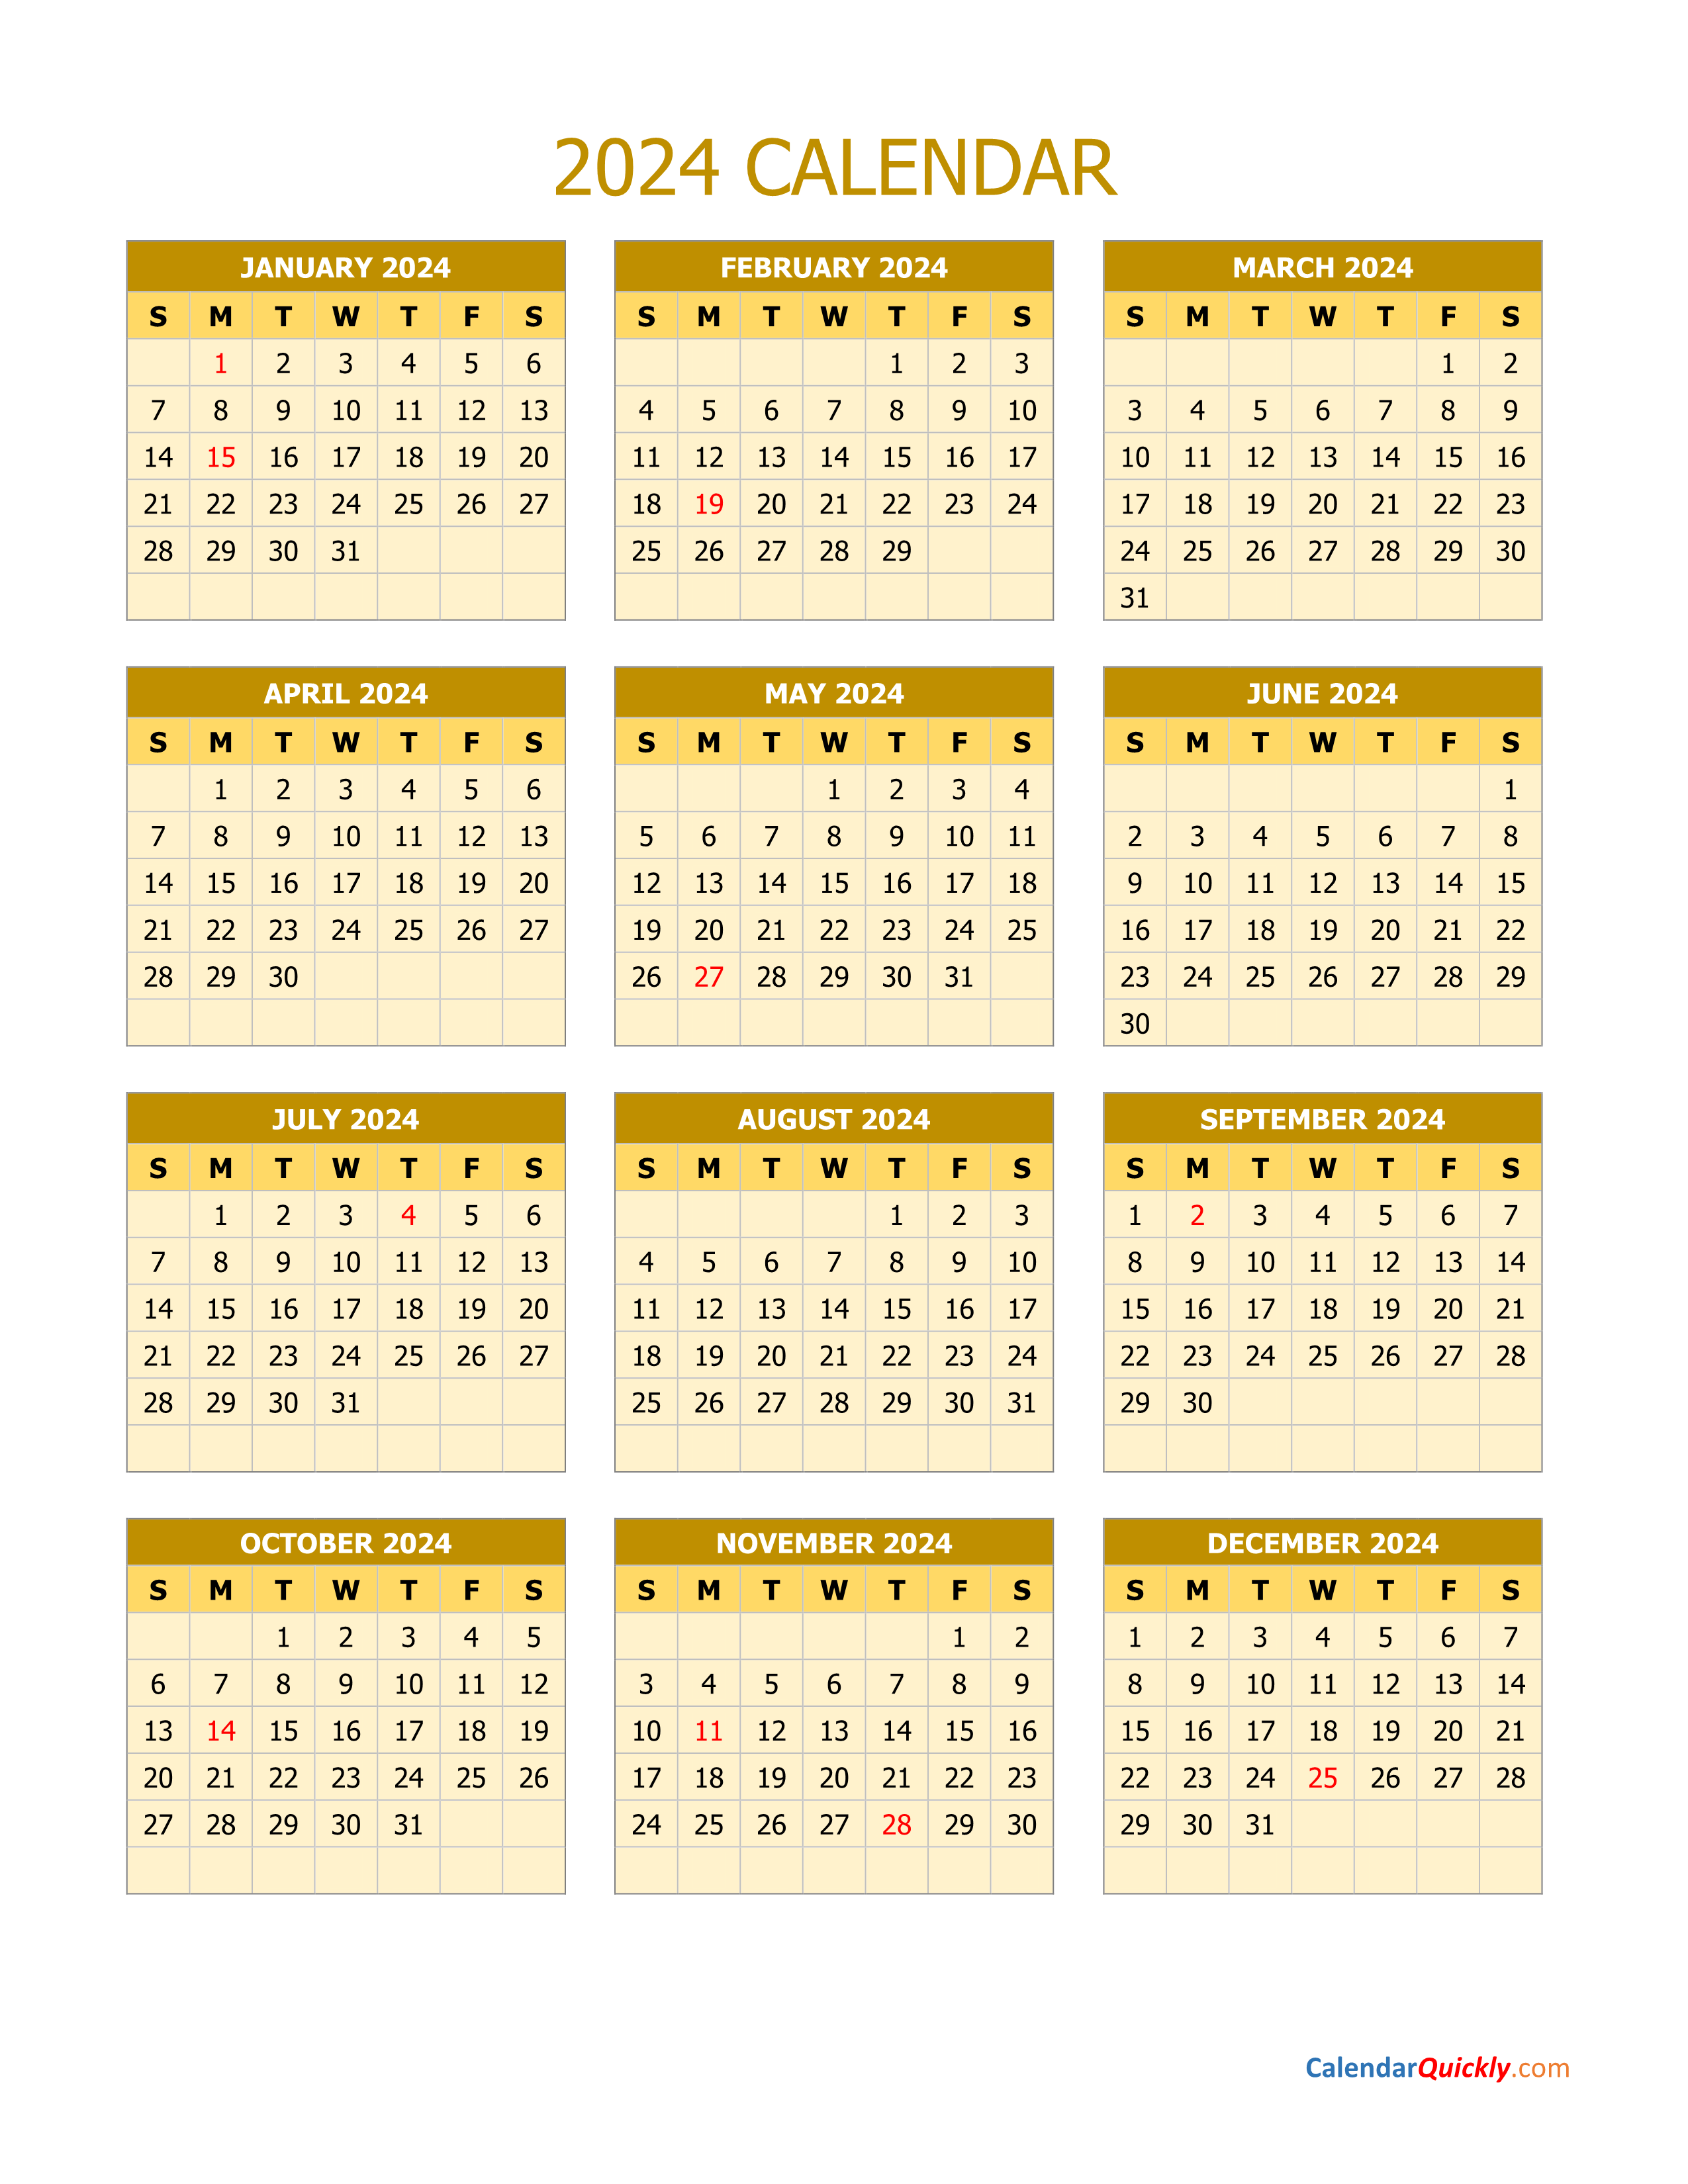 2024 Calendar Vertical | Calendar Quickly